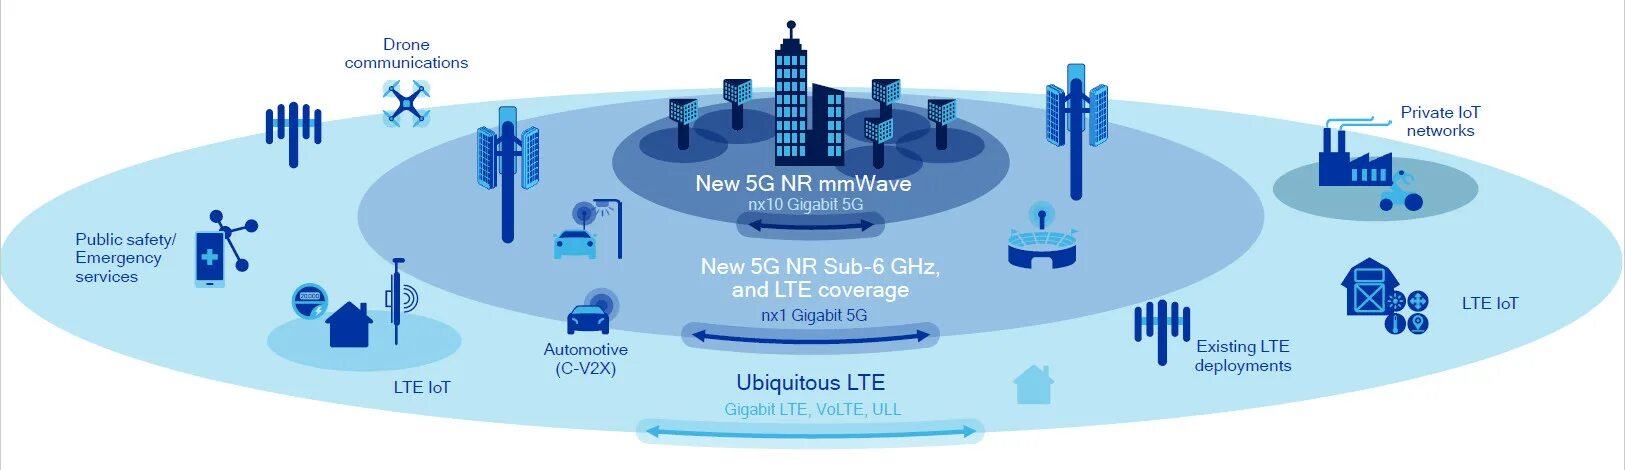 Lte устройств. 5g vs LTE. Частная сеть LTE. Технология LTE. 5g от LTE.